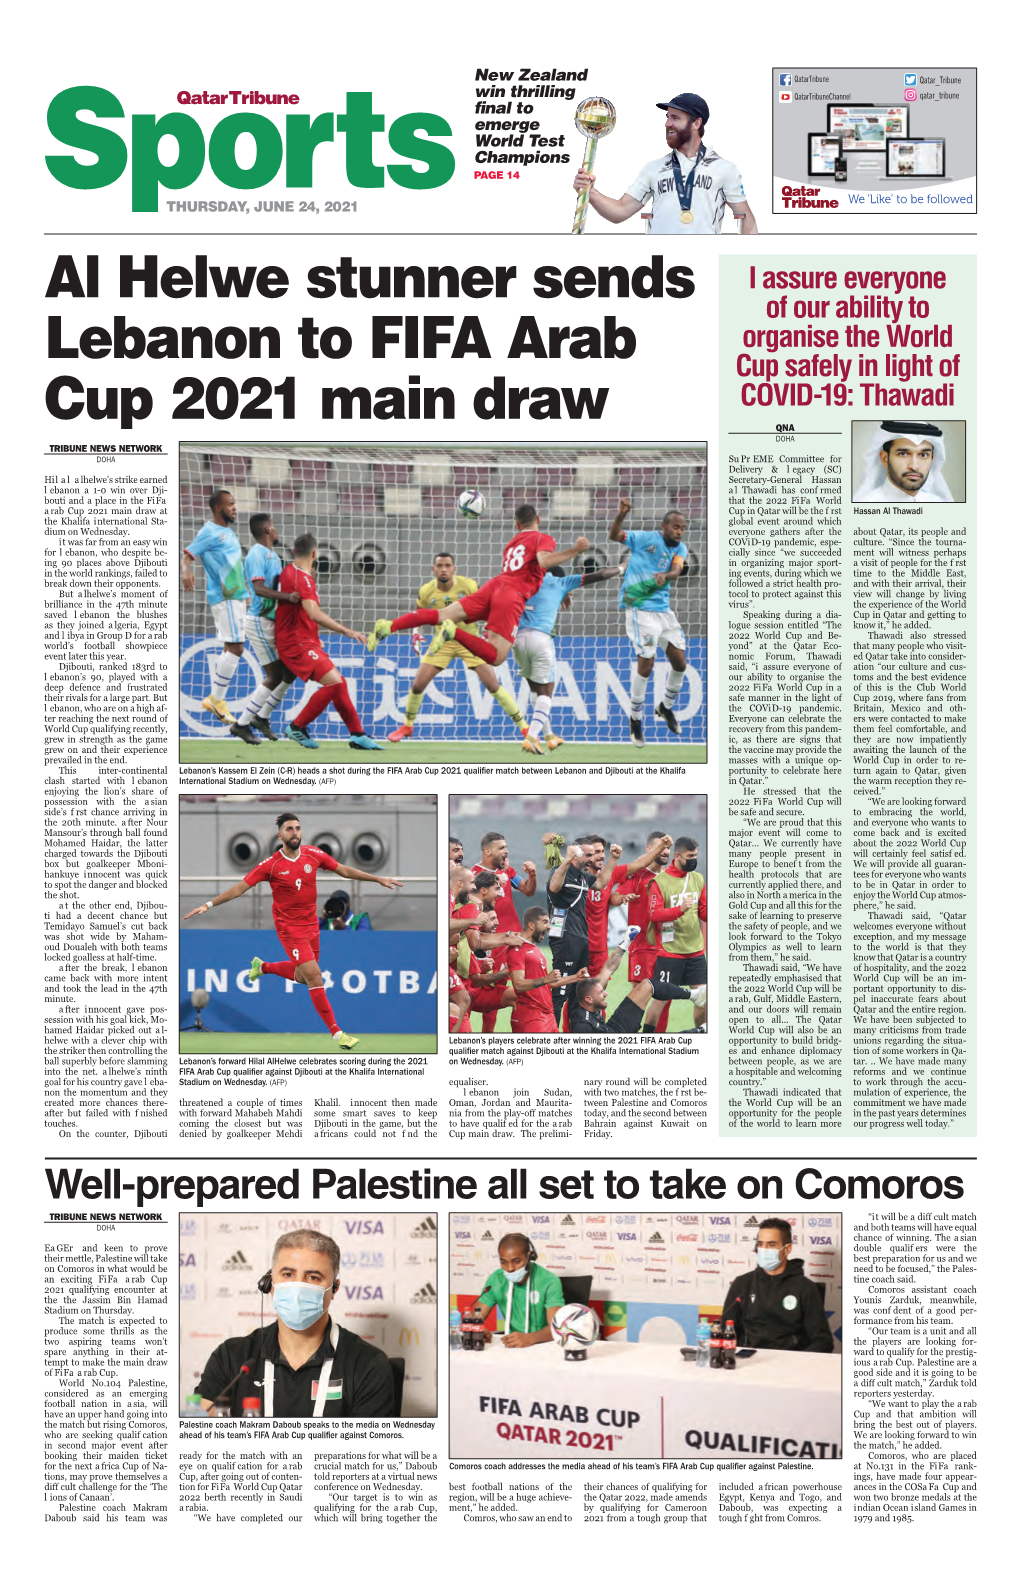 Al Helwe Stunner Sends Lebanon to Fifa Arab Cup 2021 Main Draw